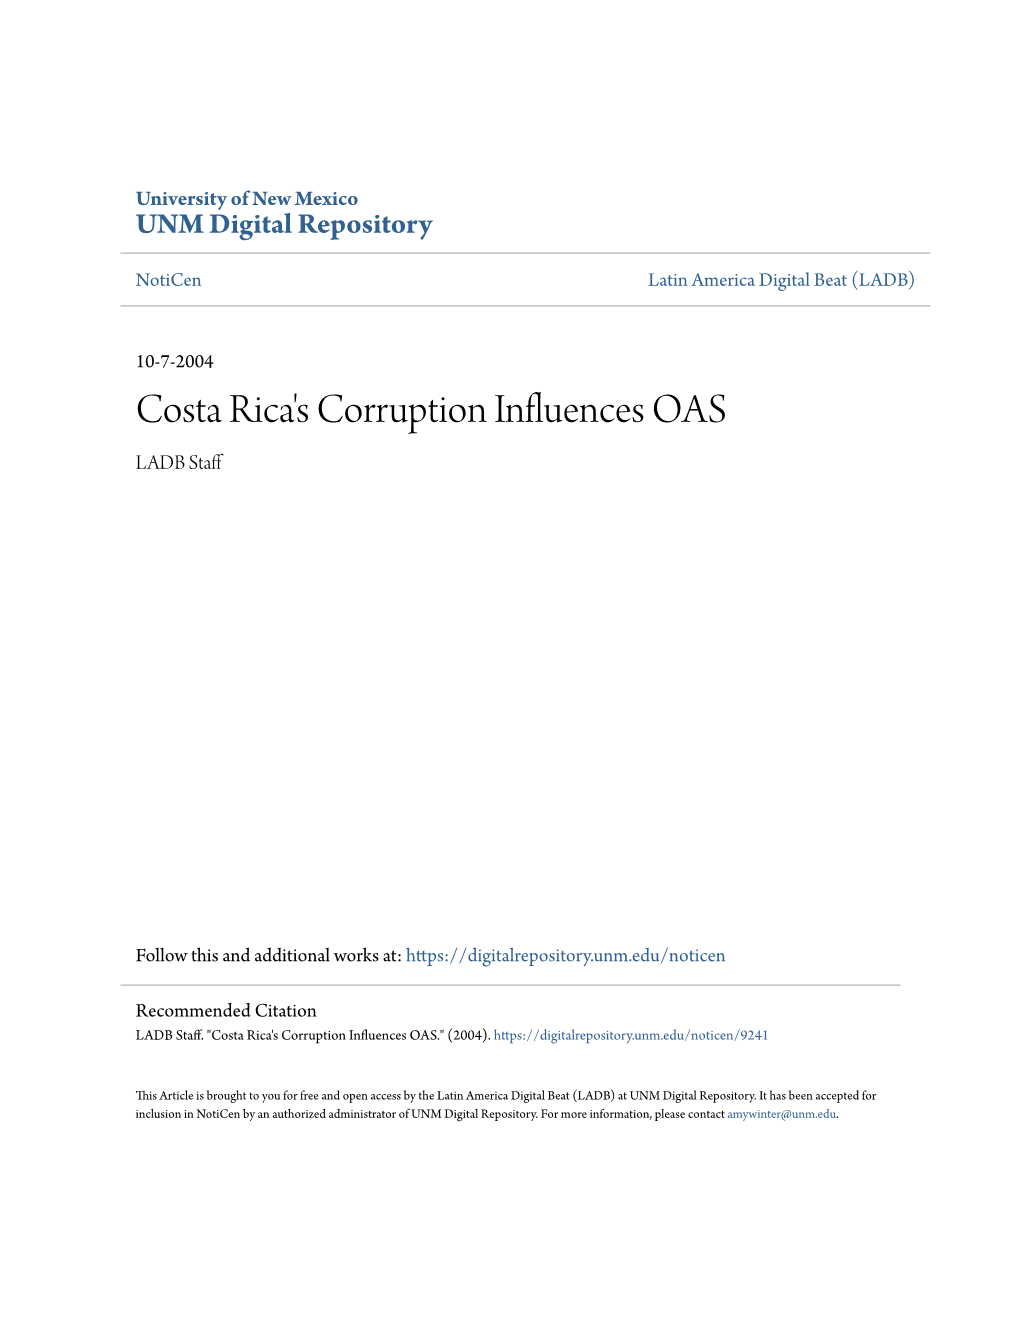 Costa Rica's Corruption Influences OAS LADB Staff